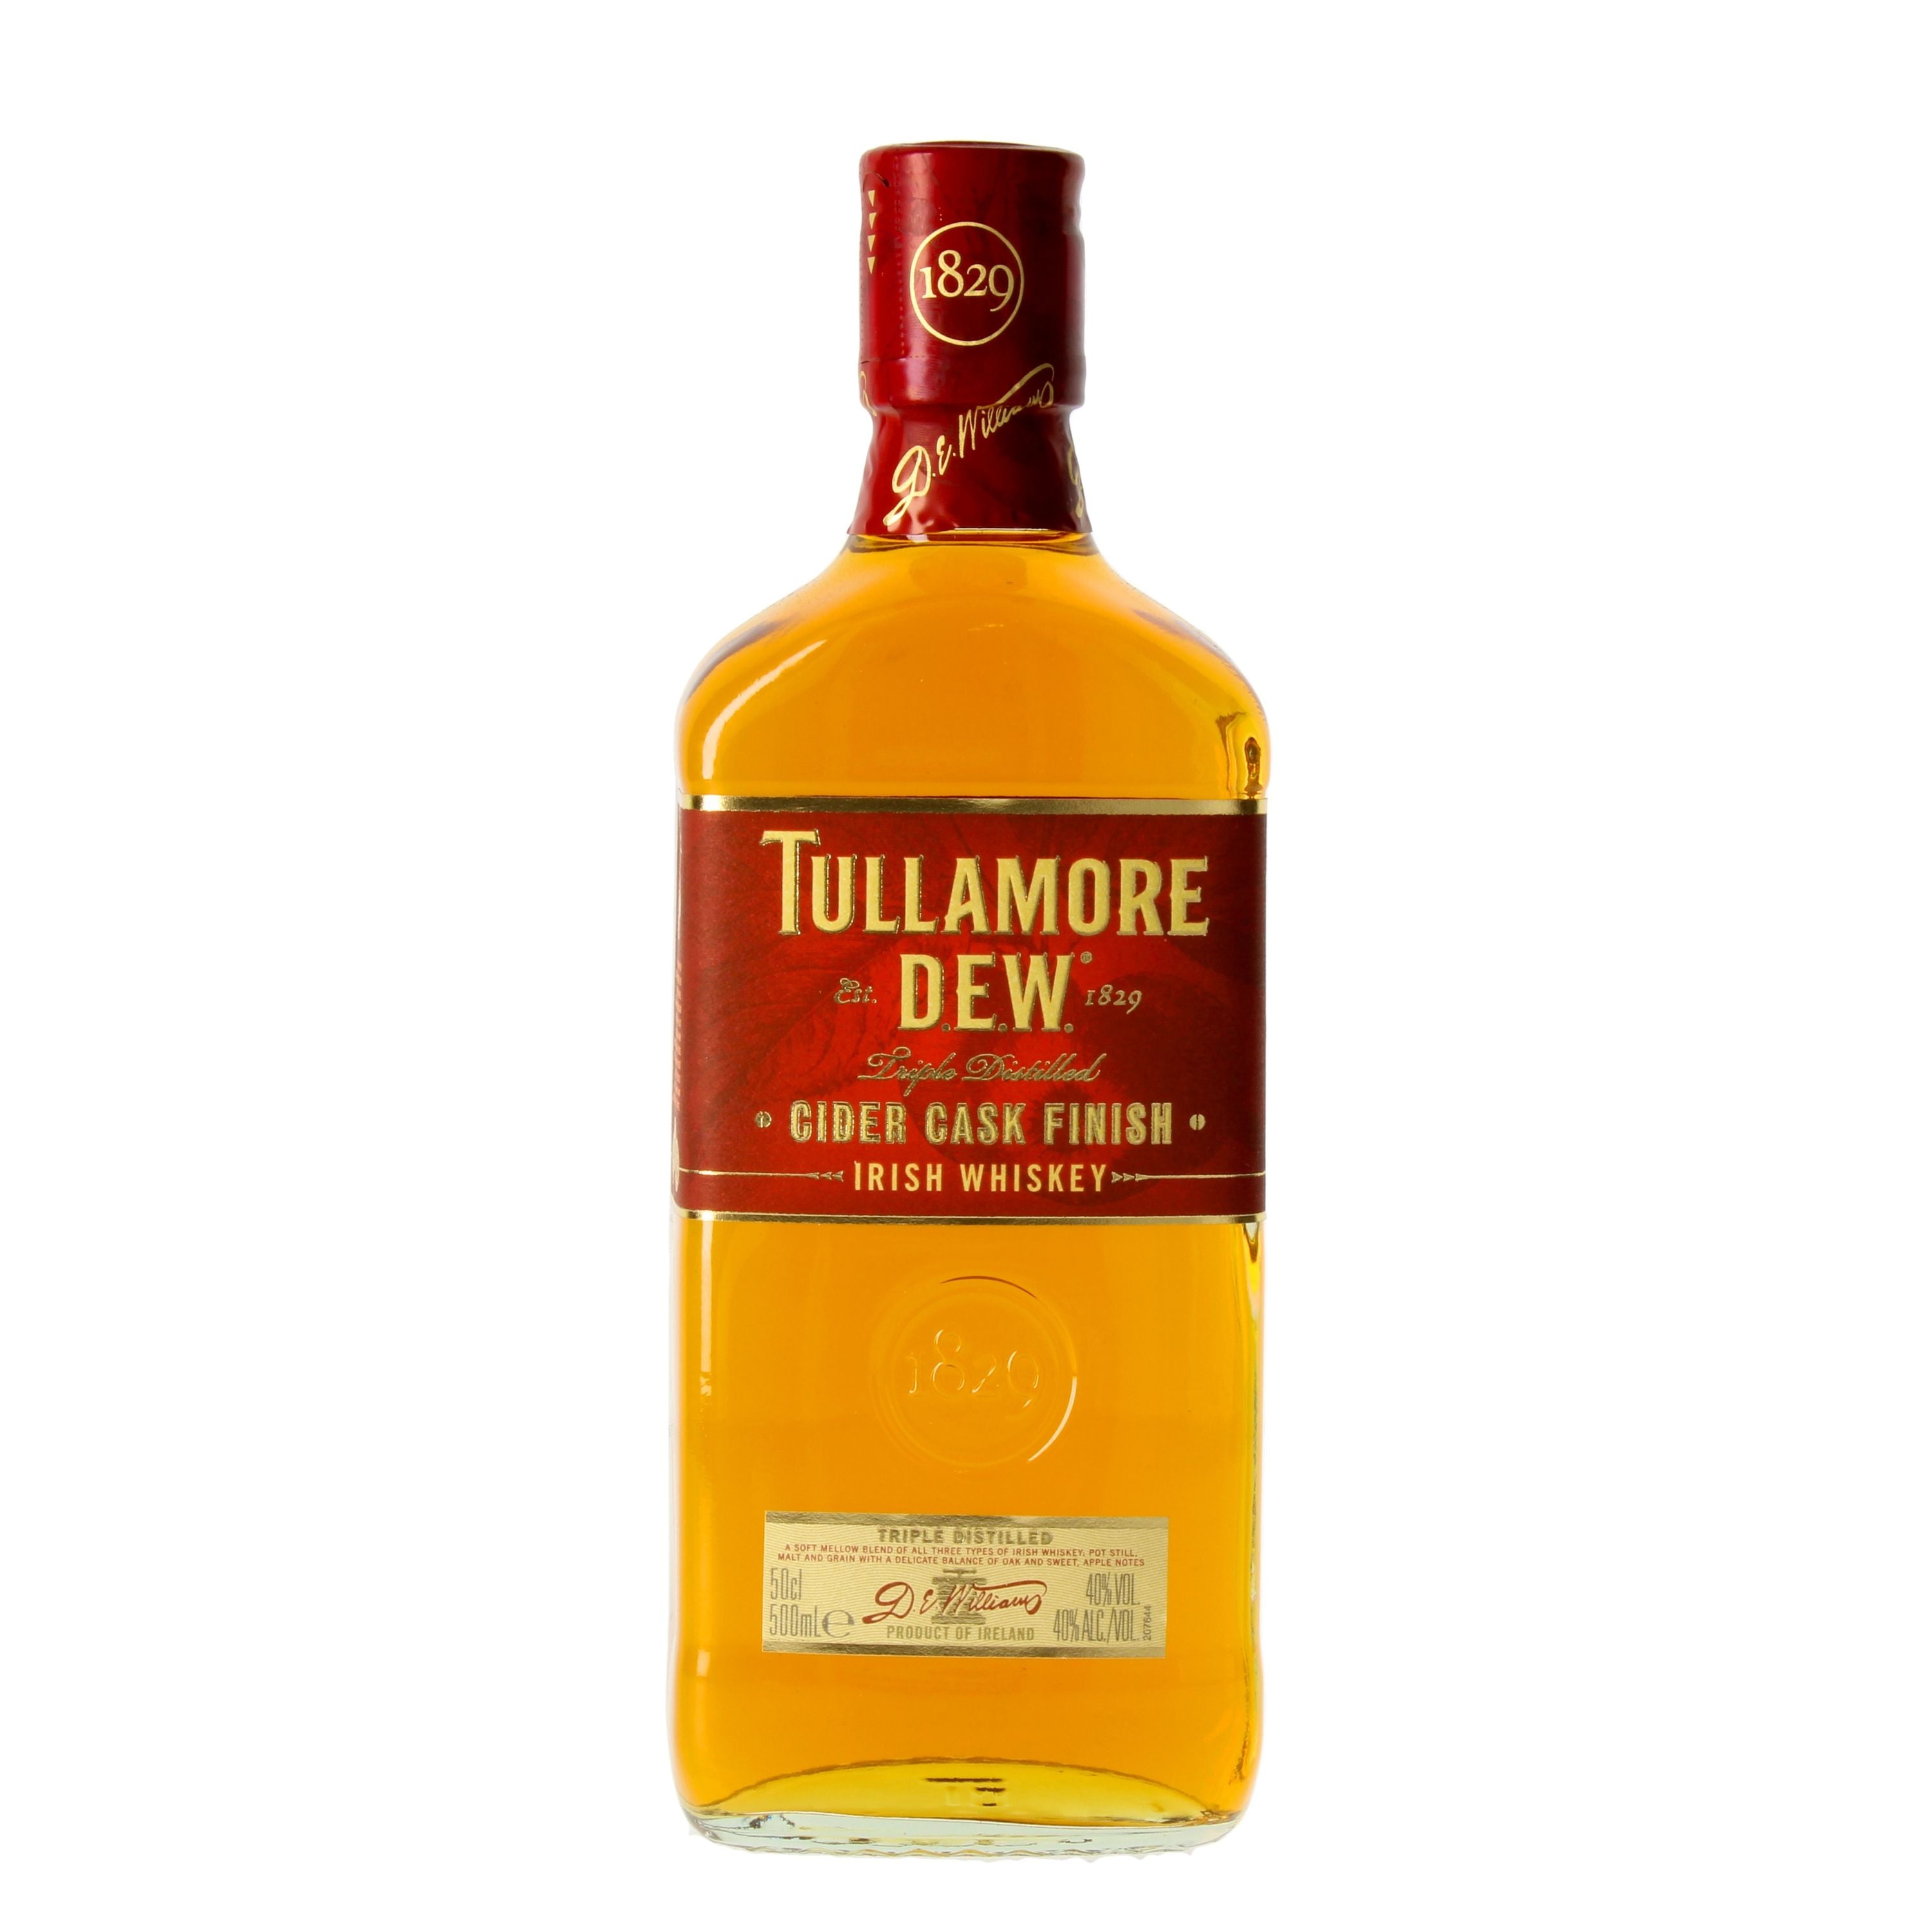 Tullamore Dew Cider Cask Finish Irish Whiskey 0.5l, alc. 40% by volume